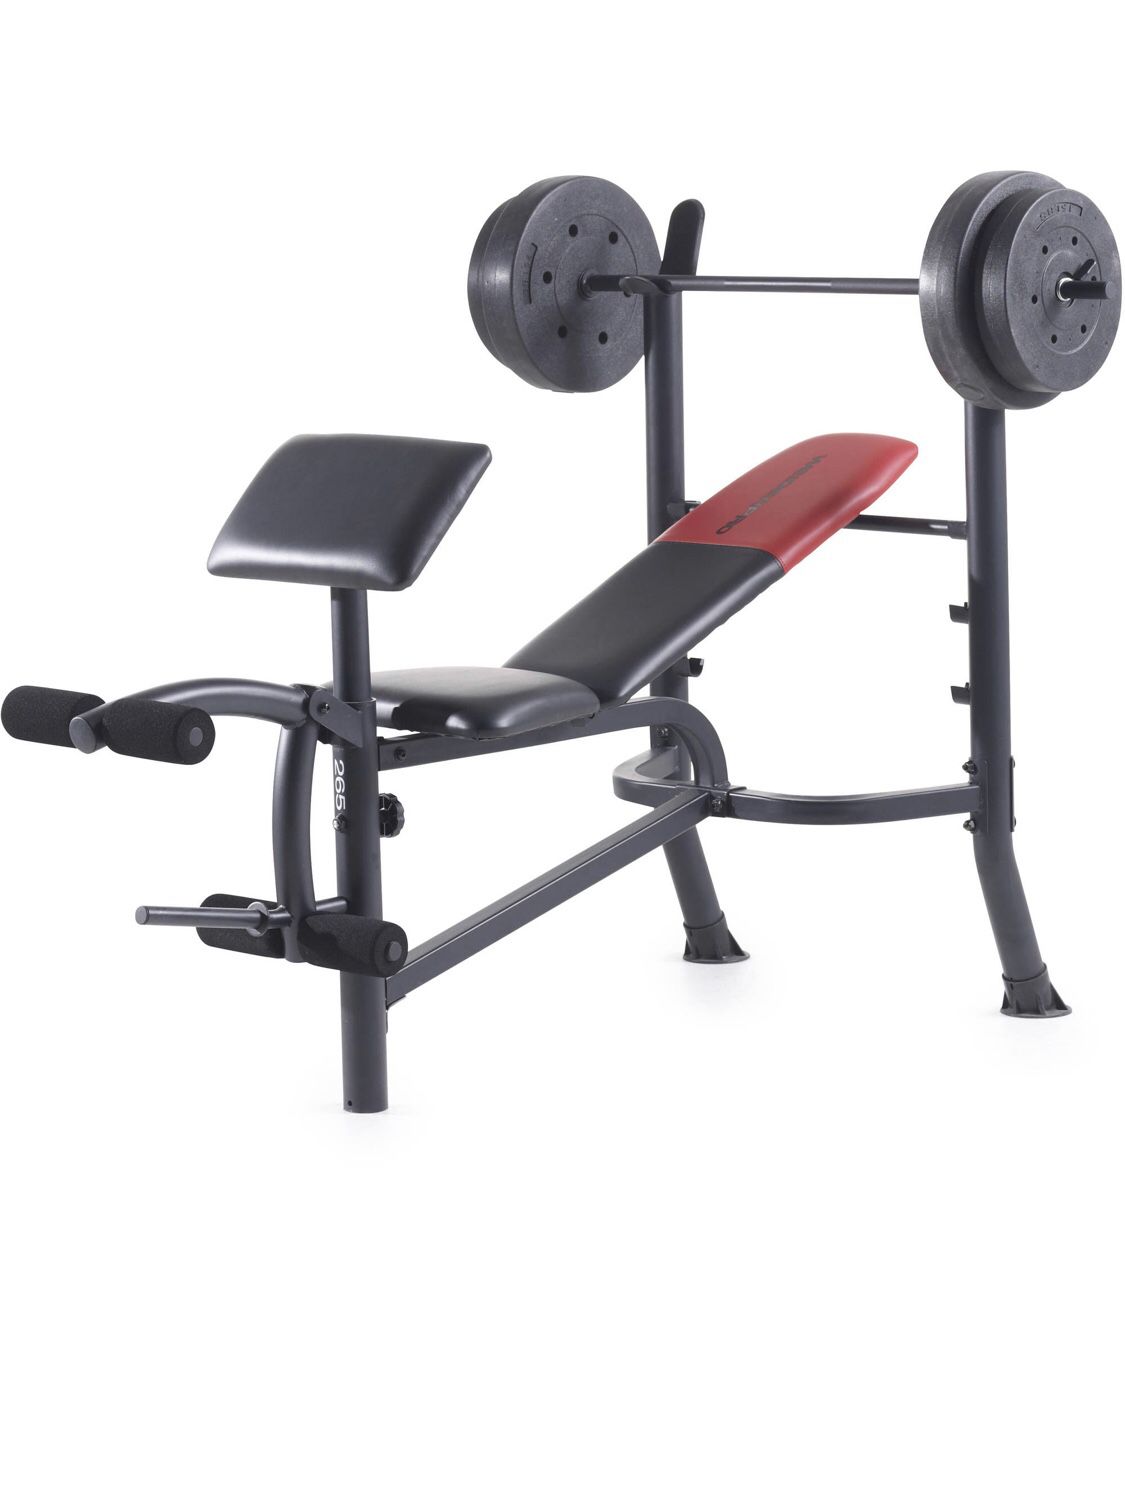 Weider standard adjustable weight bench with 80lb weight bar set